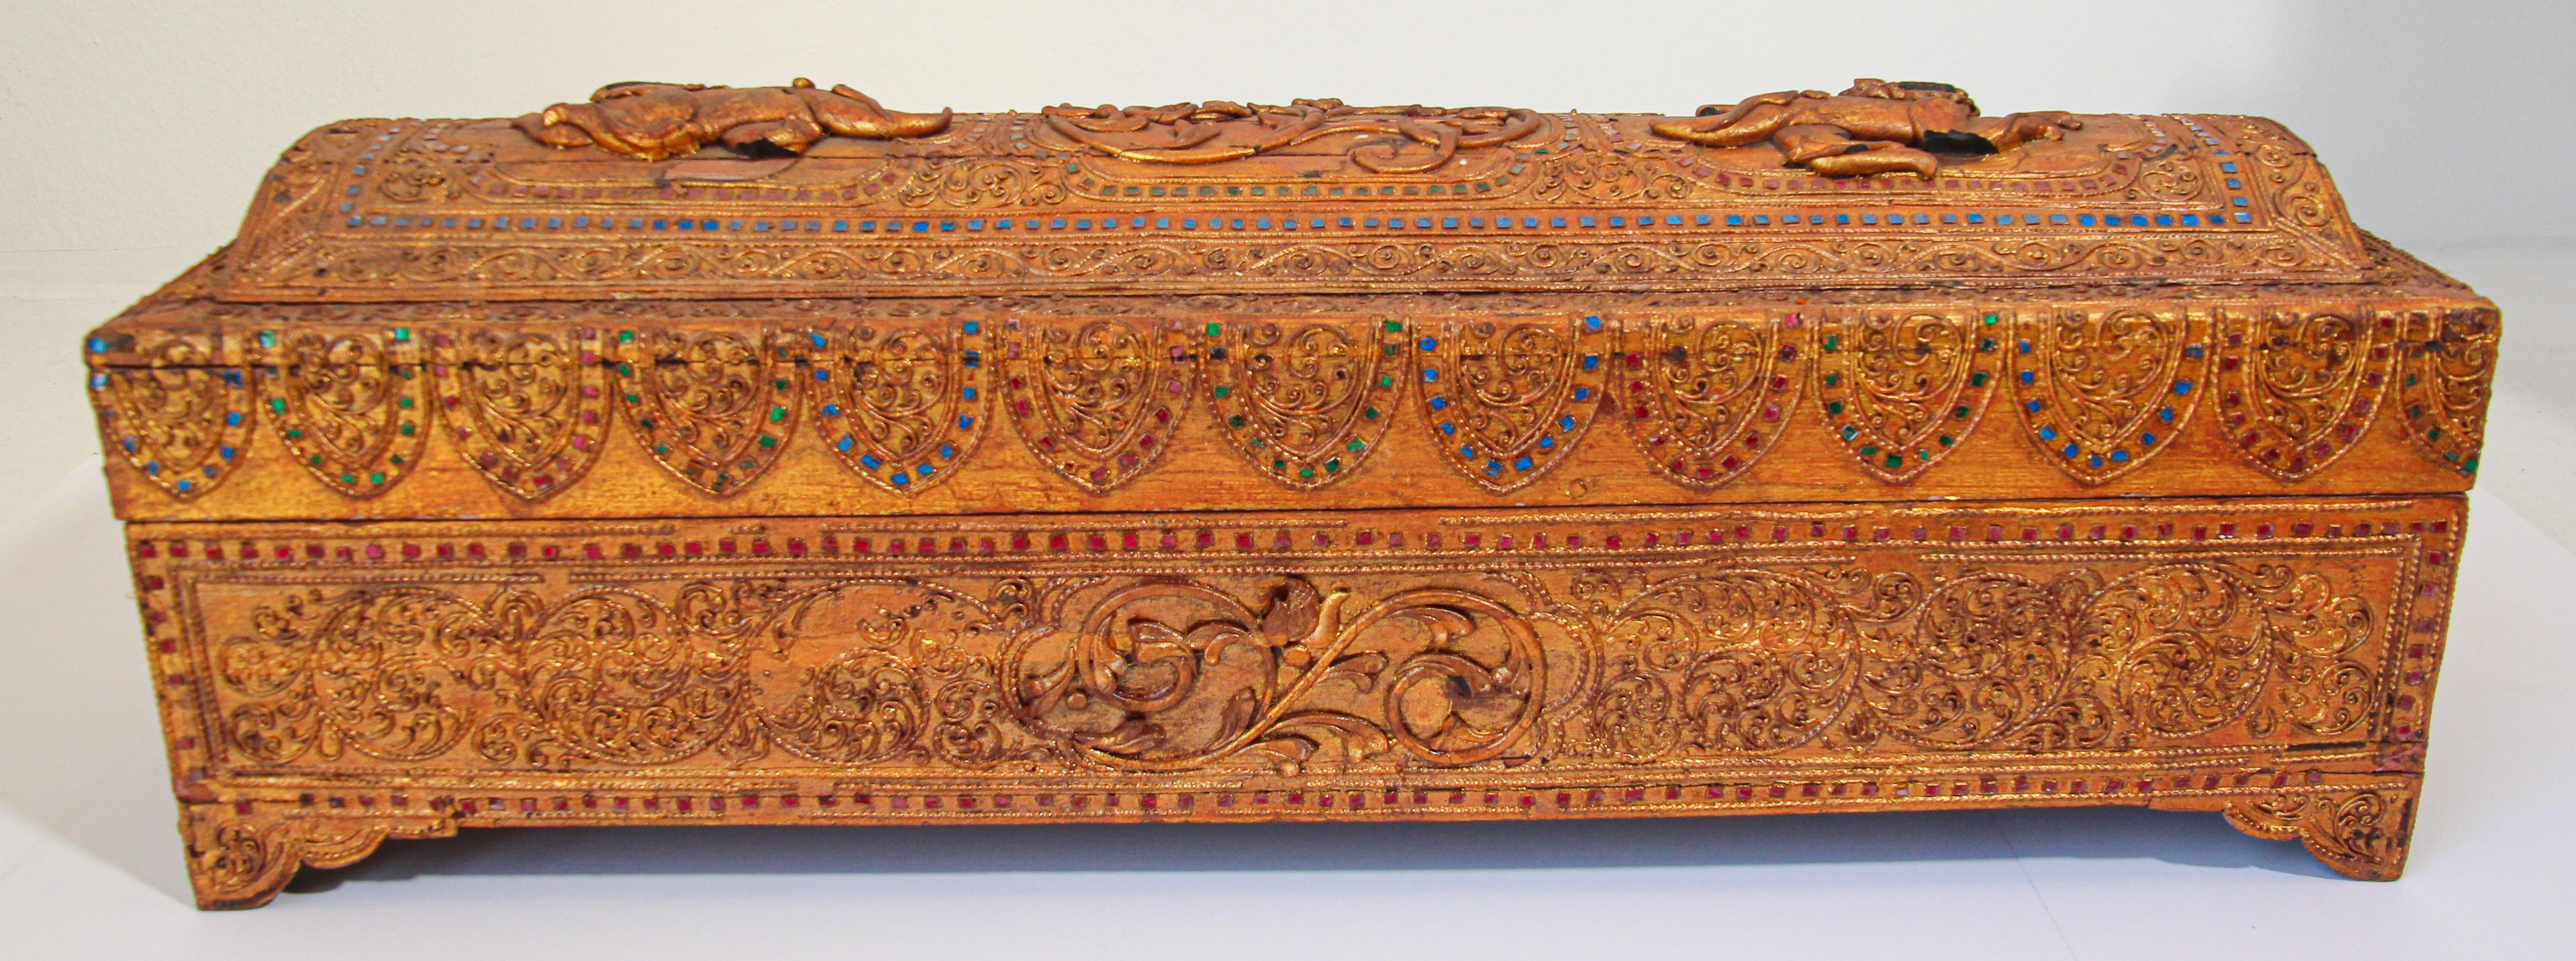 Gilt Lacquer Wood Manuscript Storage Box Burma 19th Century For Sale 8